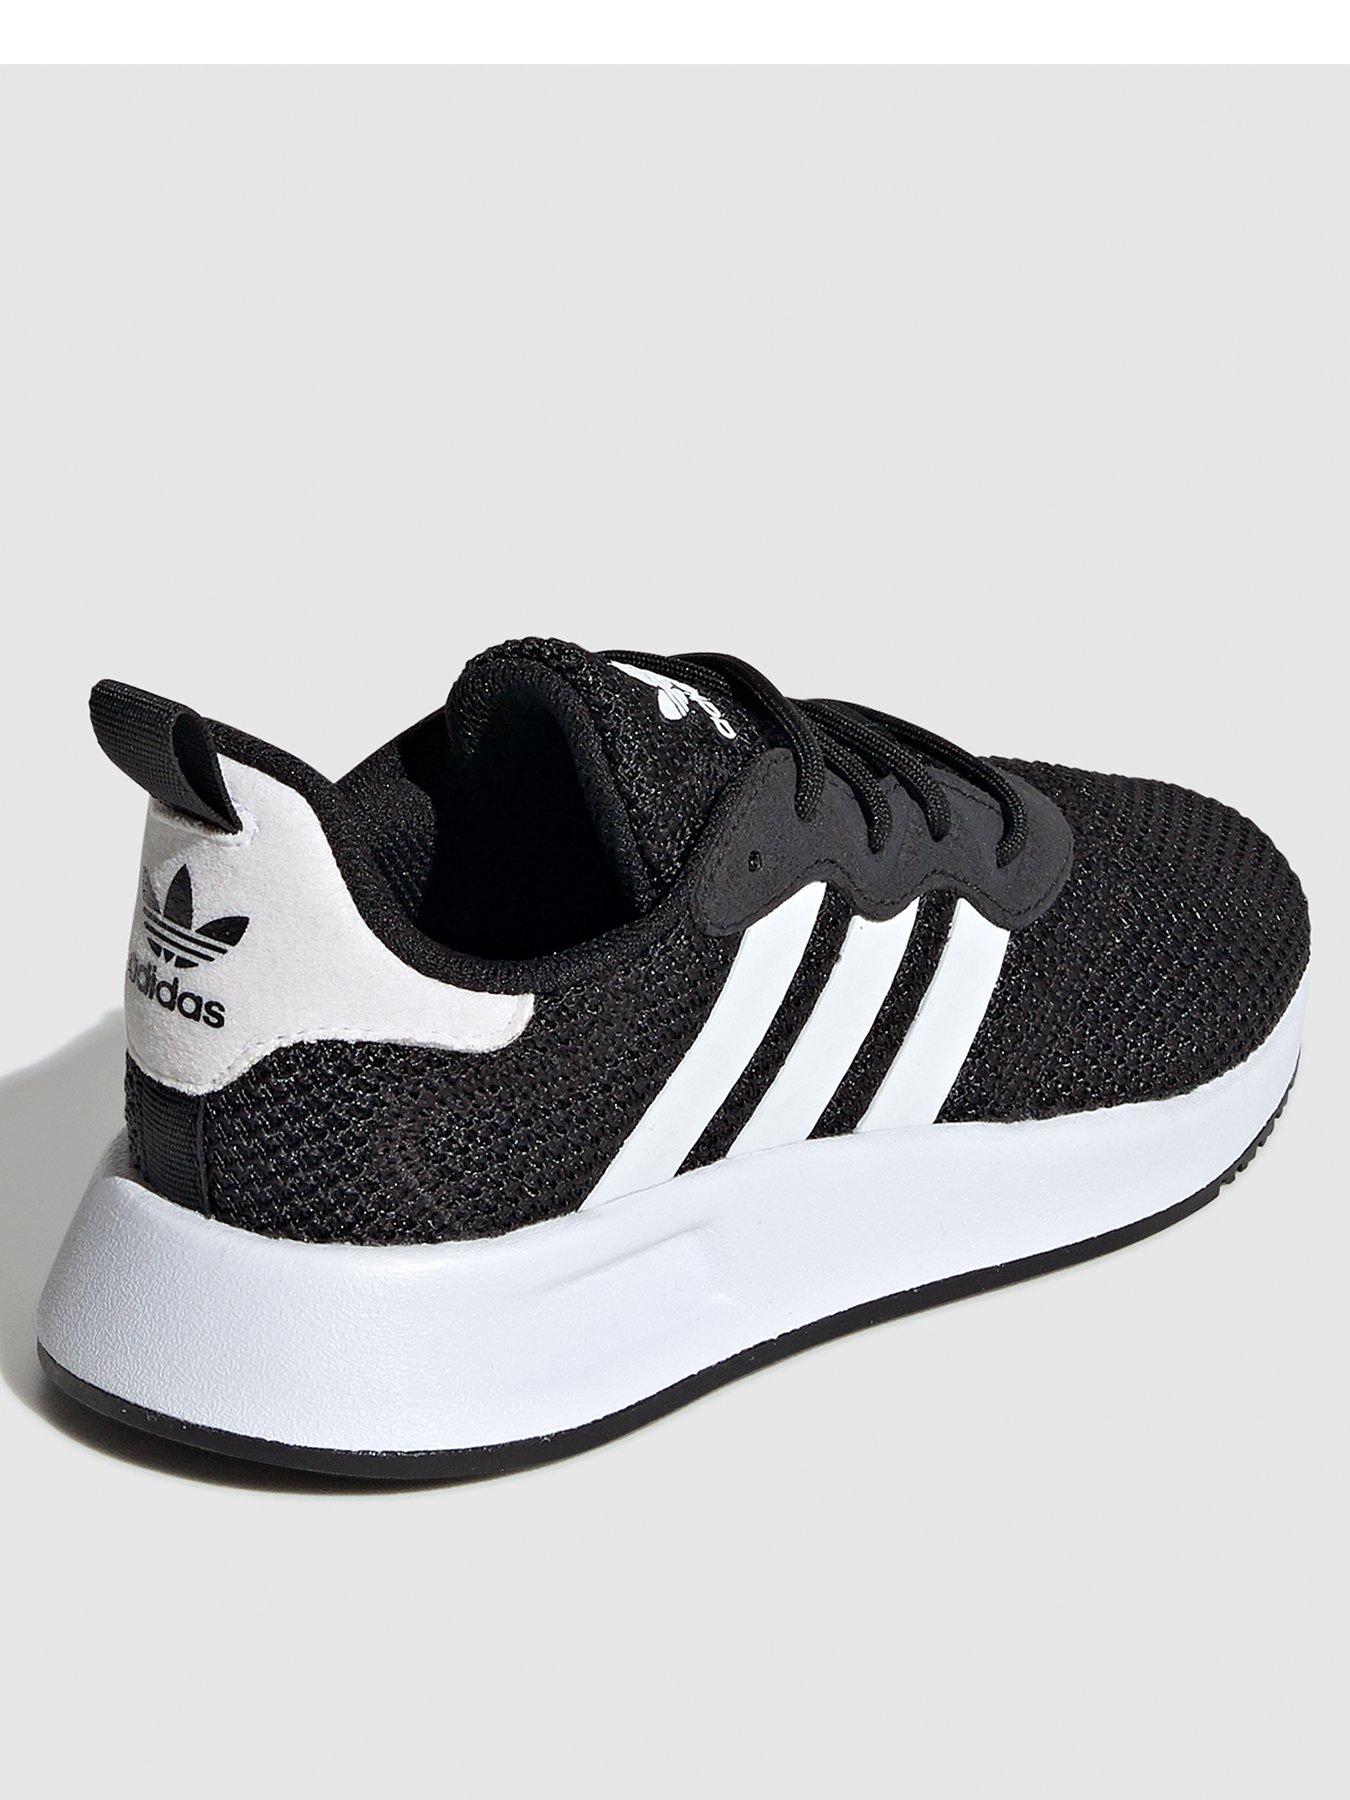 adidas x_plr junior black and white